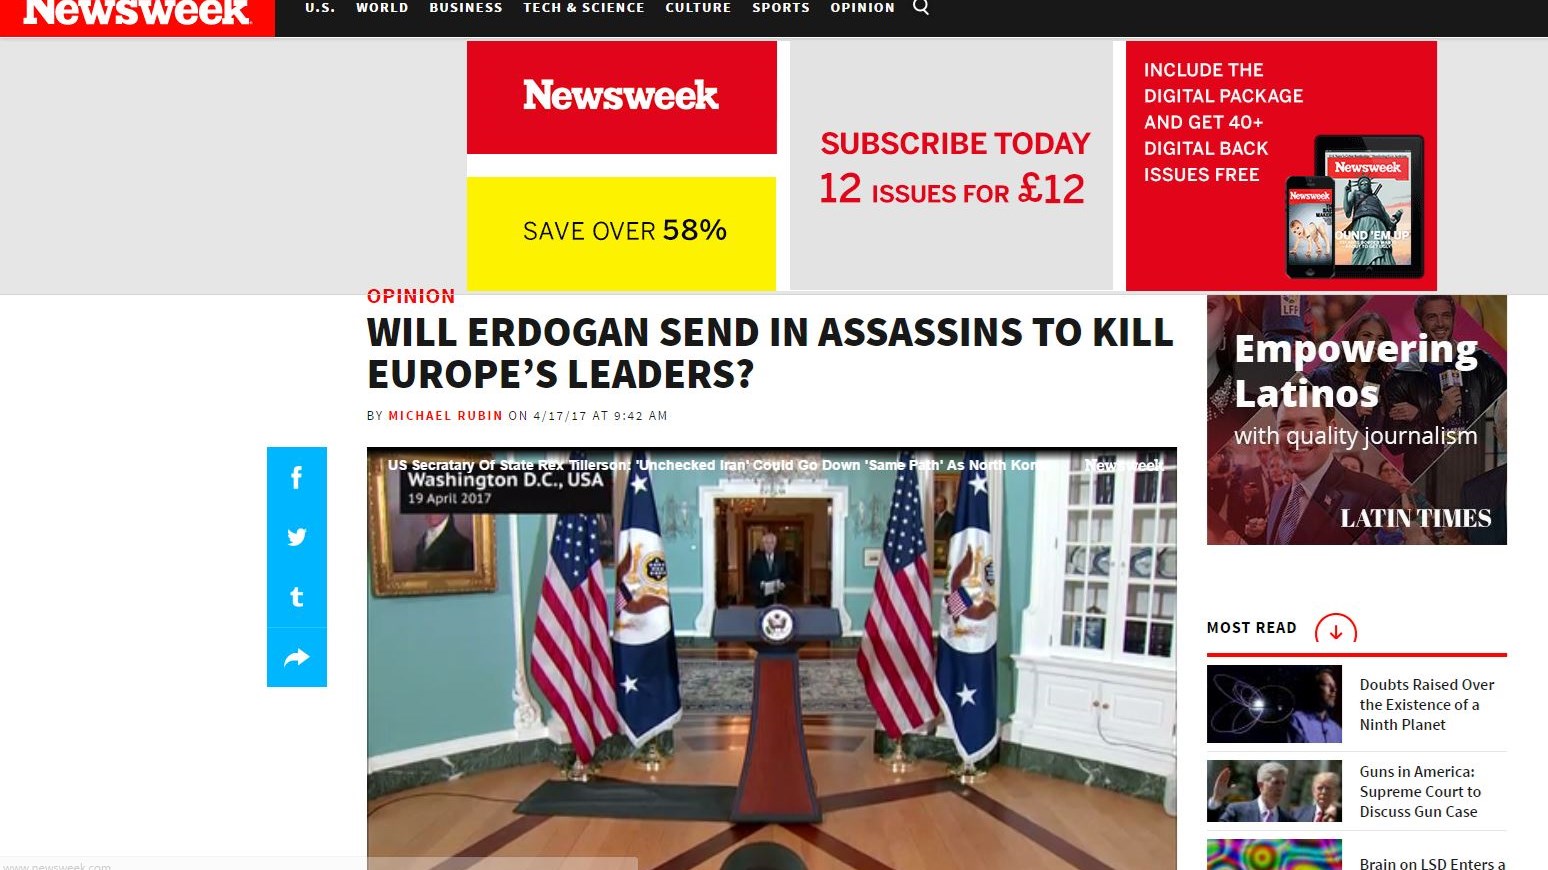 Newsweek: Θα στείλει ο Ερντογάν δολοφόνους να σκοτώσουν τους Ευρωπαίους ηγέτες;